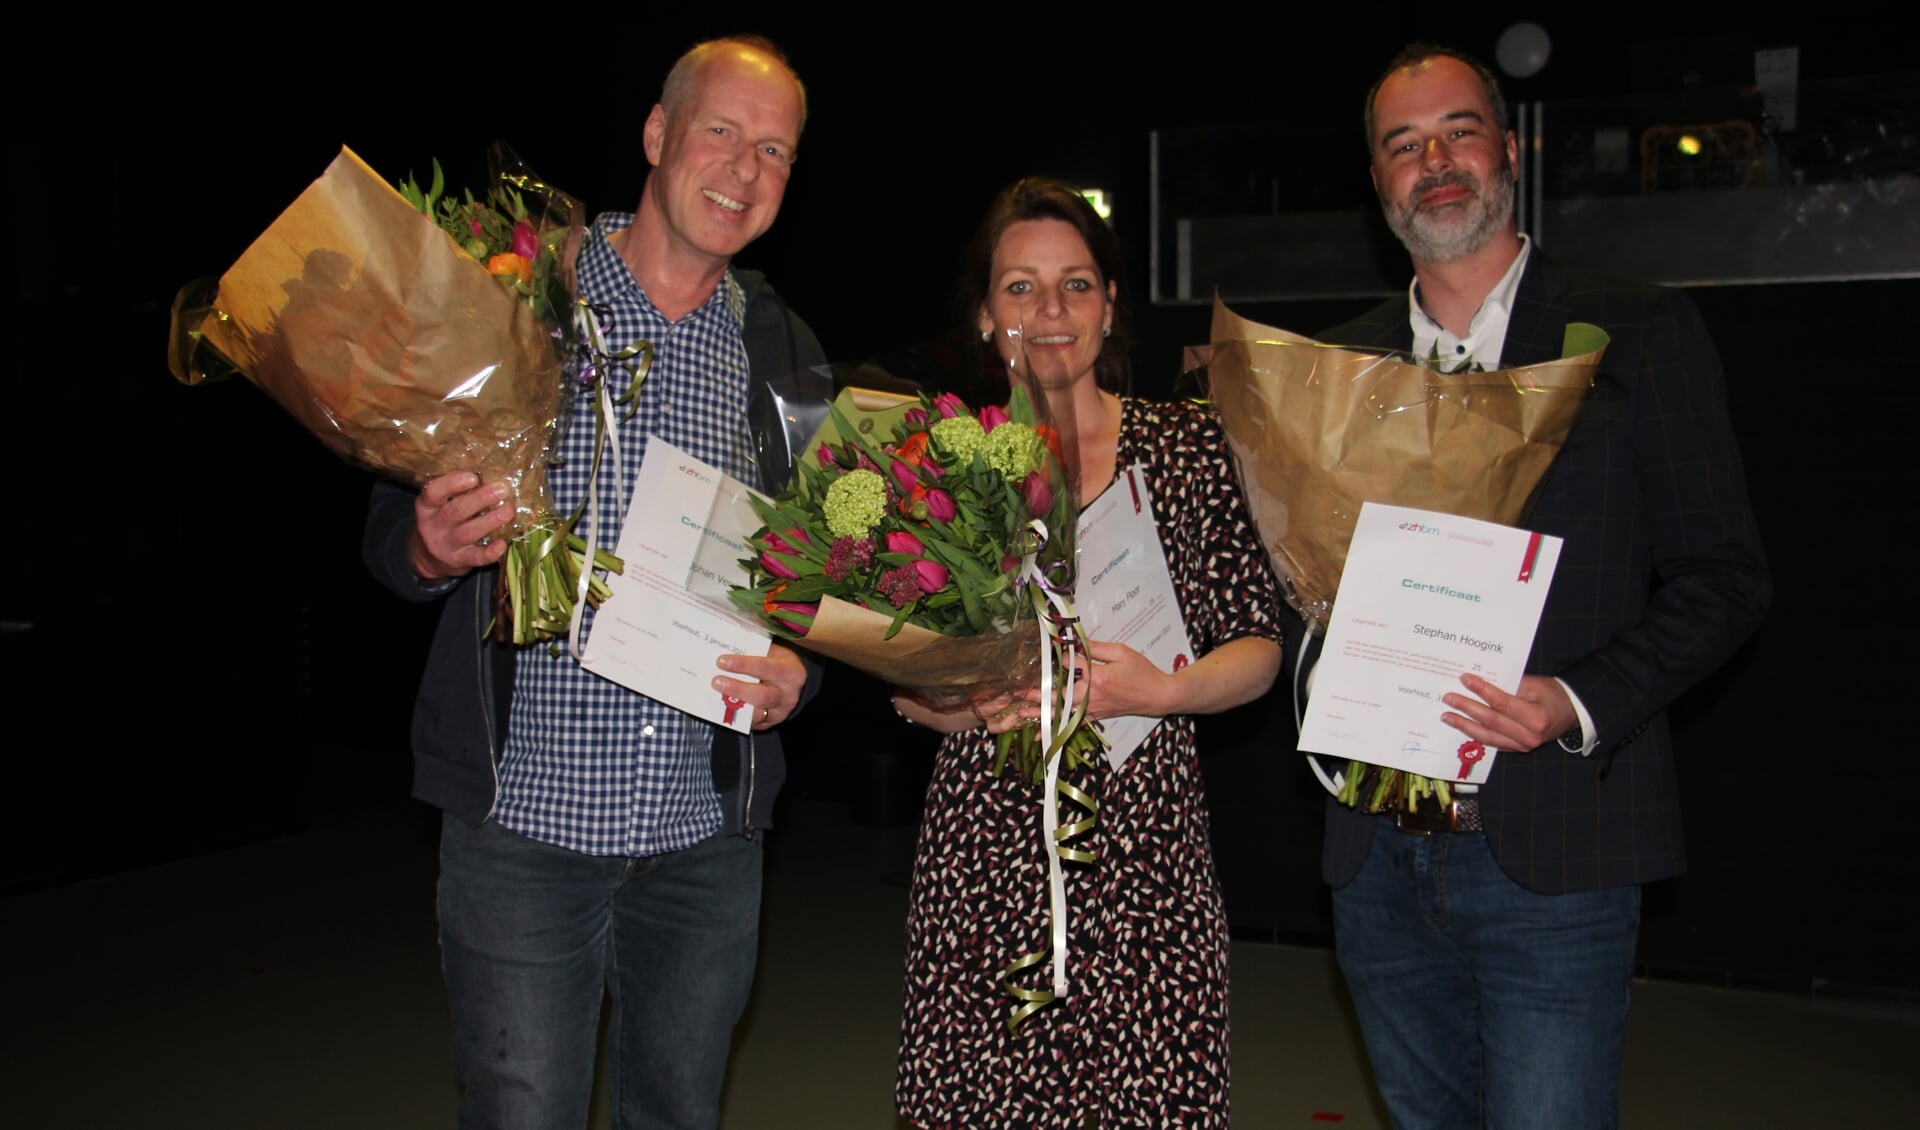 De drie jubilarissen, v.l.n.r.: Johan Versluijs, Mary Floor en Stephan Hoogink.